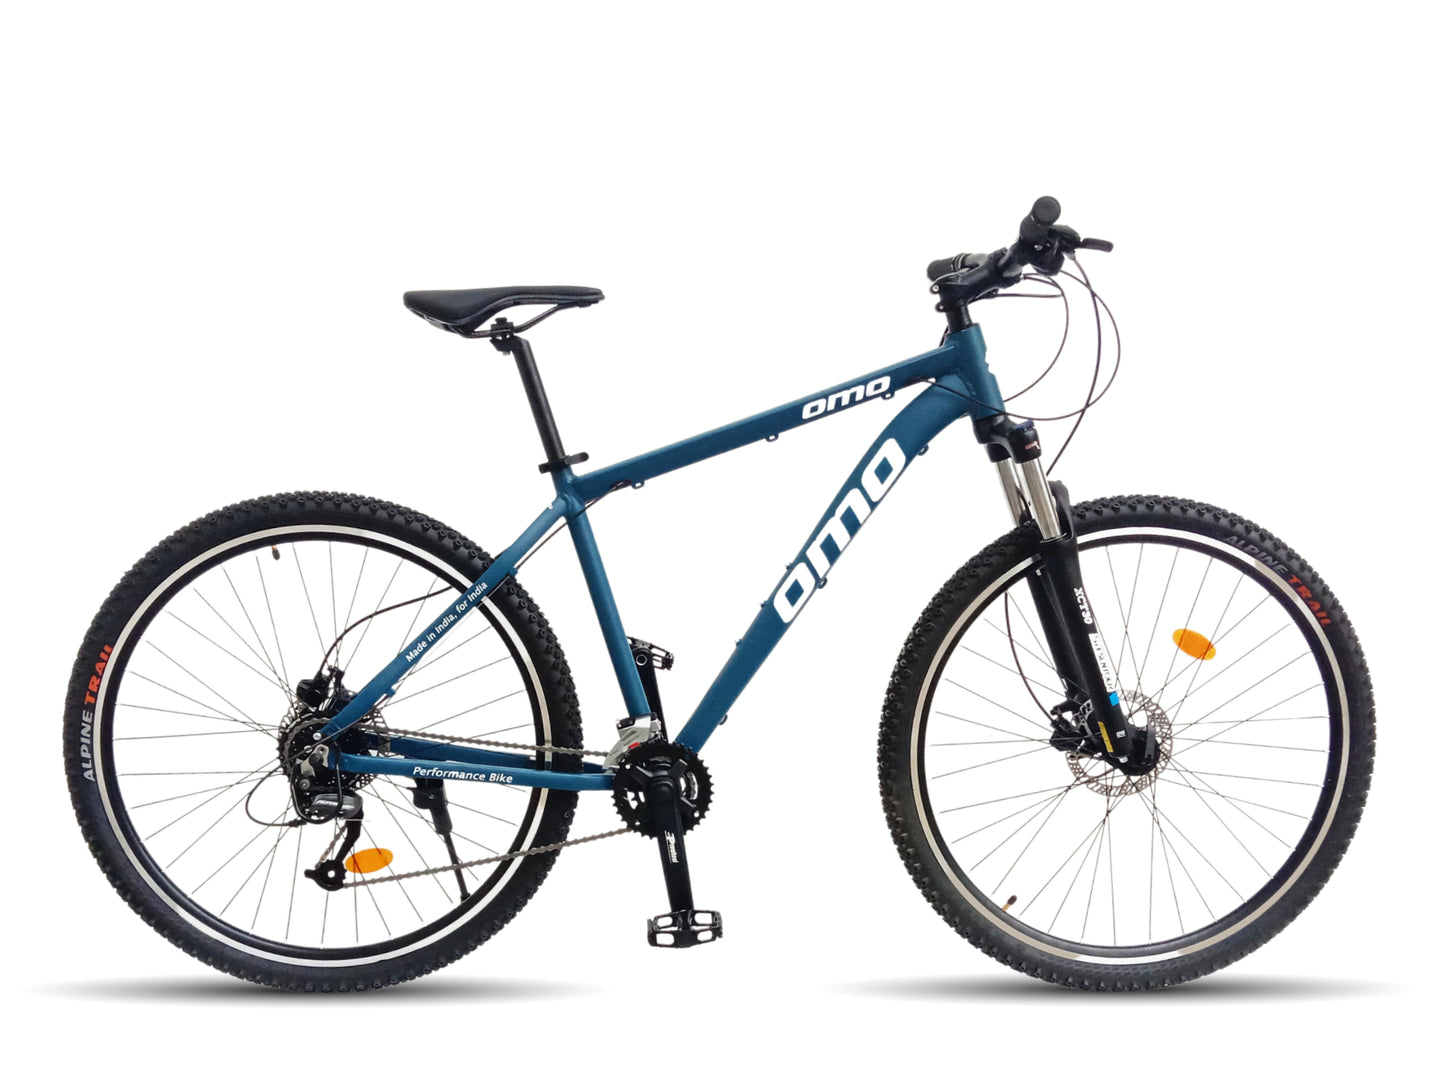 omobikes zojila 3x9 alivio Alloy MTB 29er mountain bike with hydraulic brakes suntour suspension blue color side view 